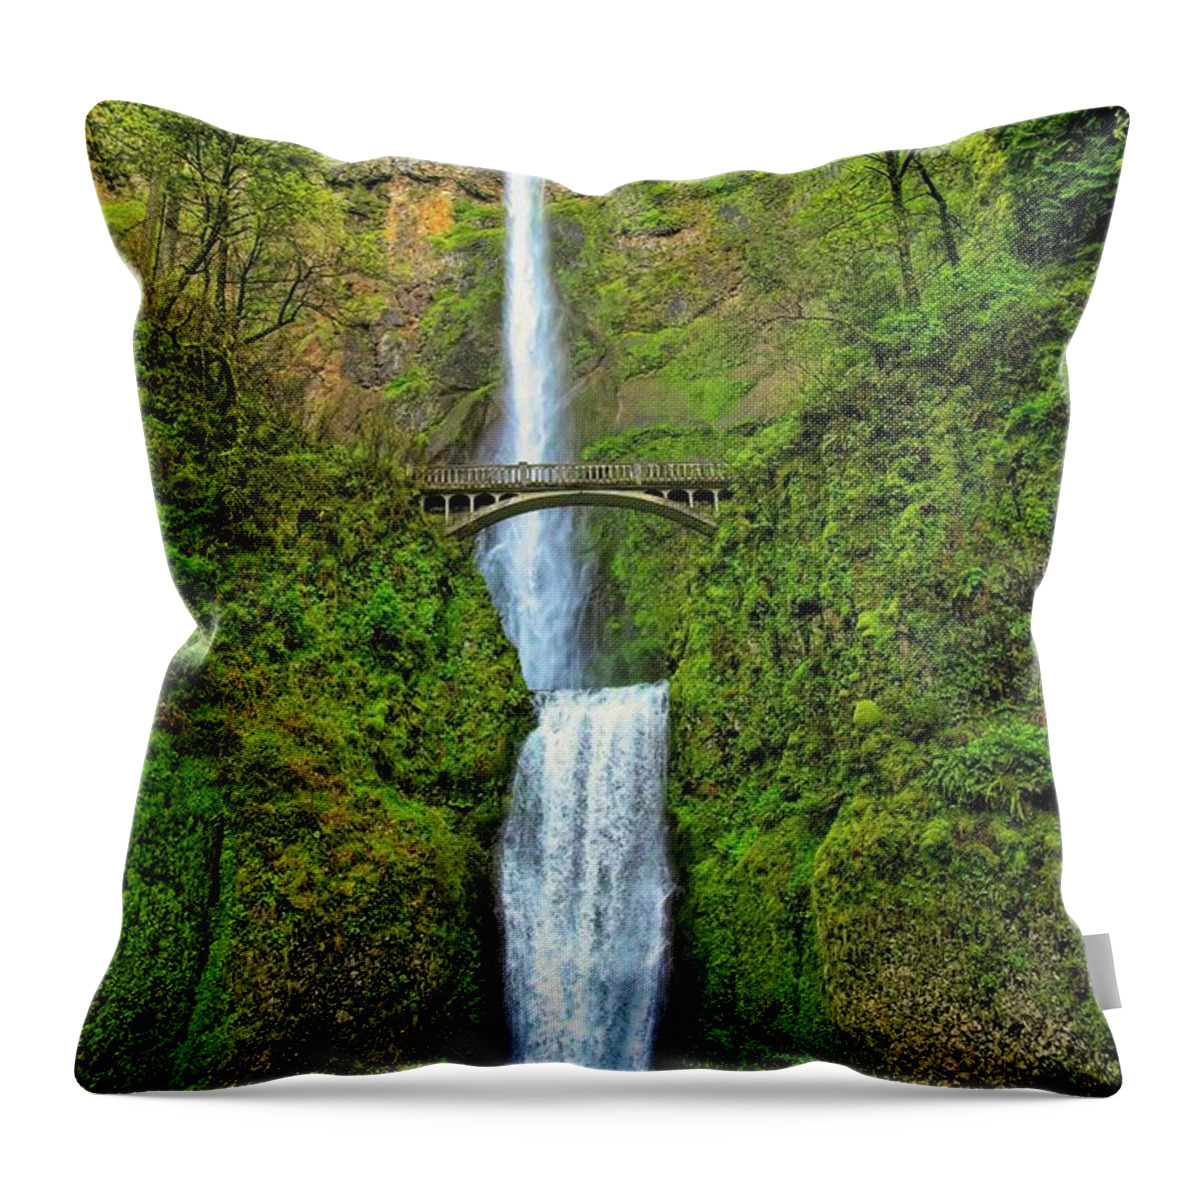 Jon Burch Throw Pillow featuring the photograph Multnomah Falls by Jon Burch Photography